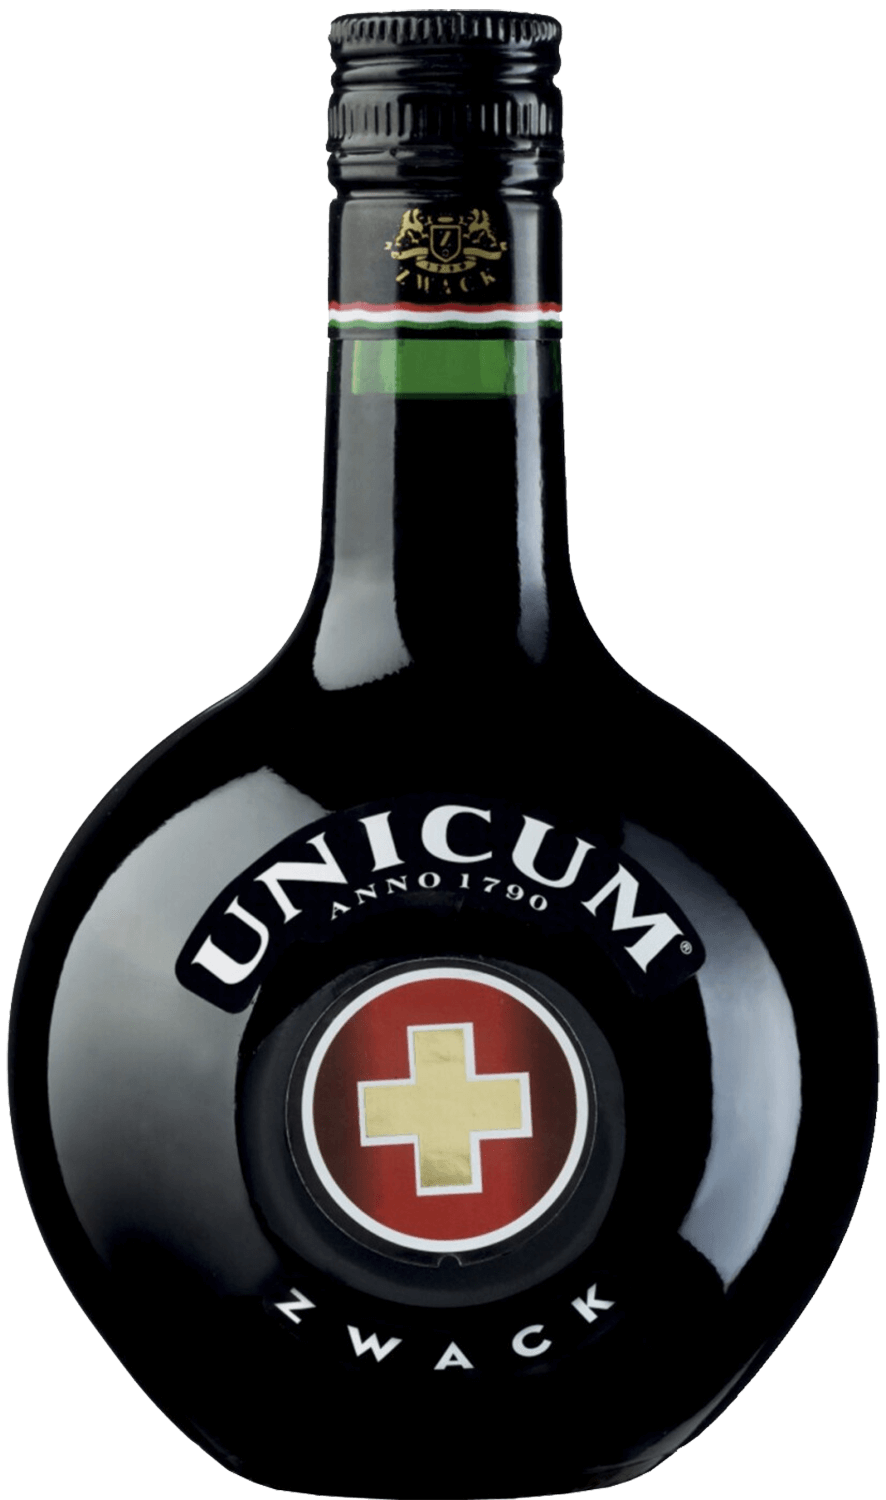 Zwack Unicum цена и фото